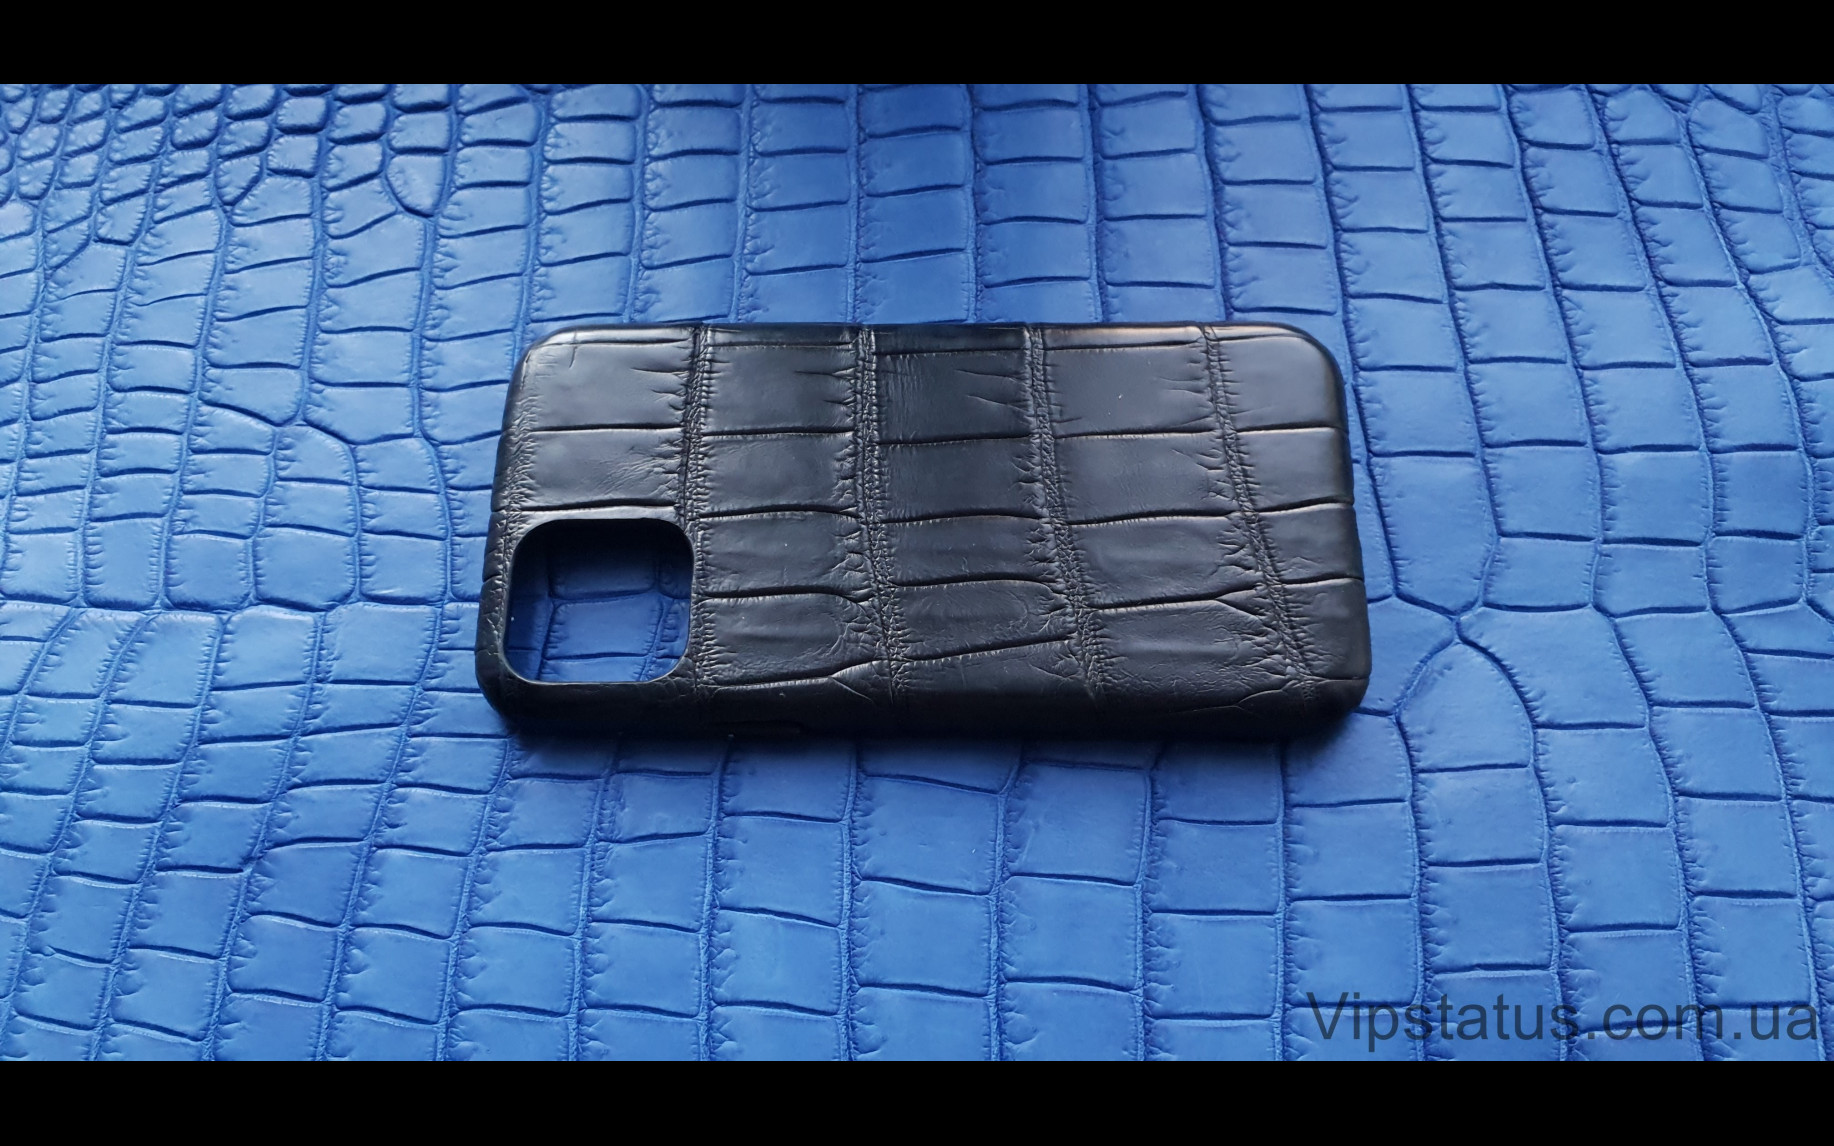 Elite Black Lord Эксклюзивный чехол IPhone 11 Pro кожа крокодила Black Lord Exclusive case IPhone 11 Pro Crocodile leather image 3